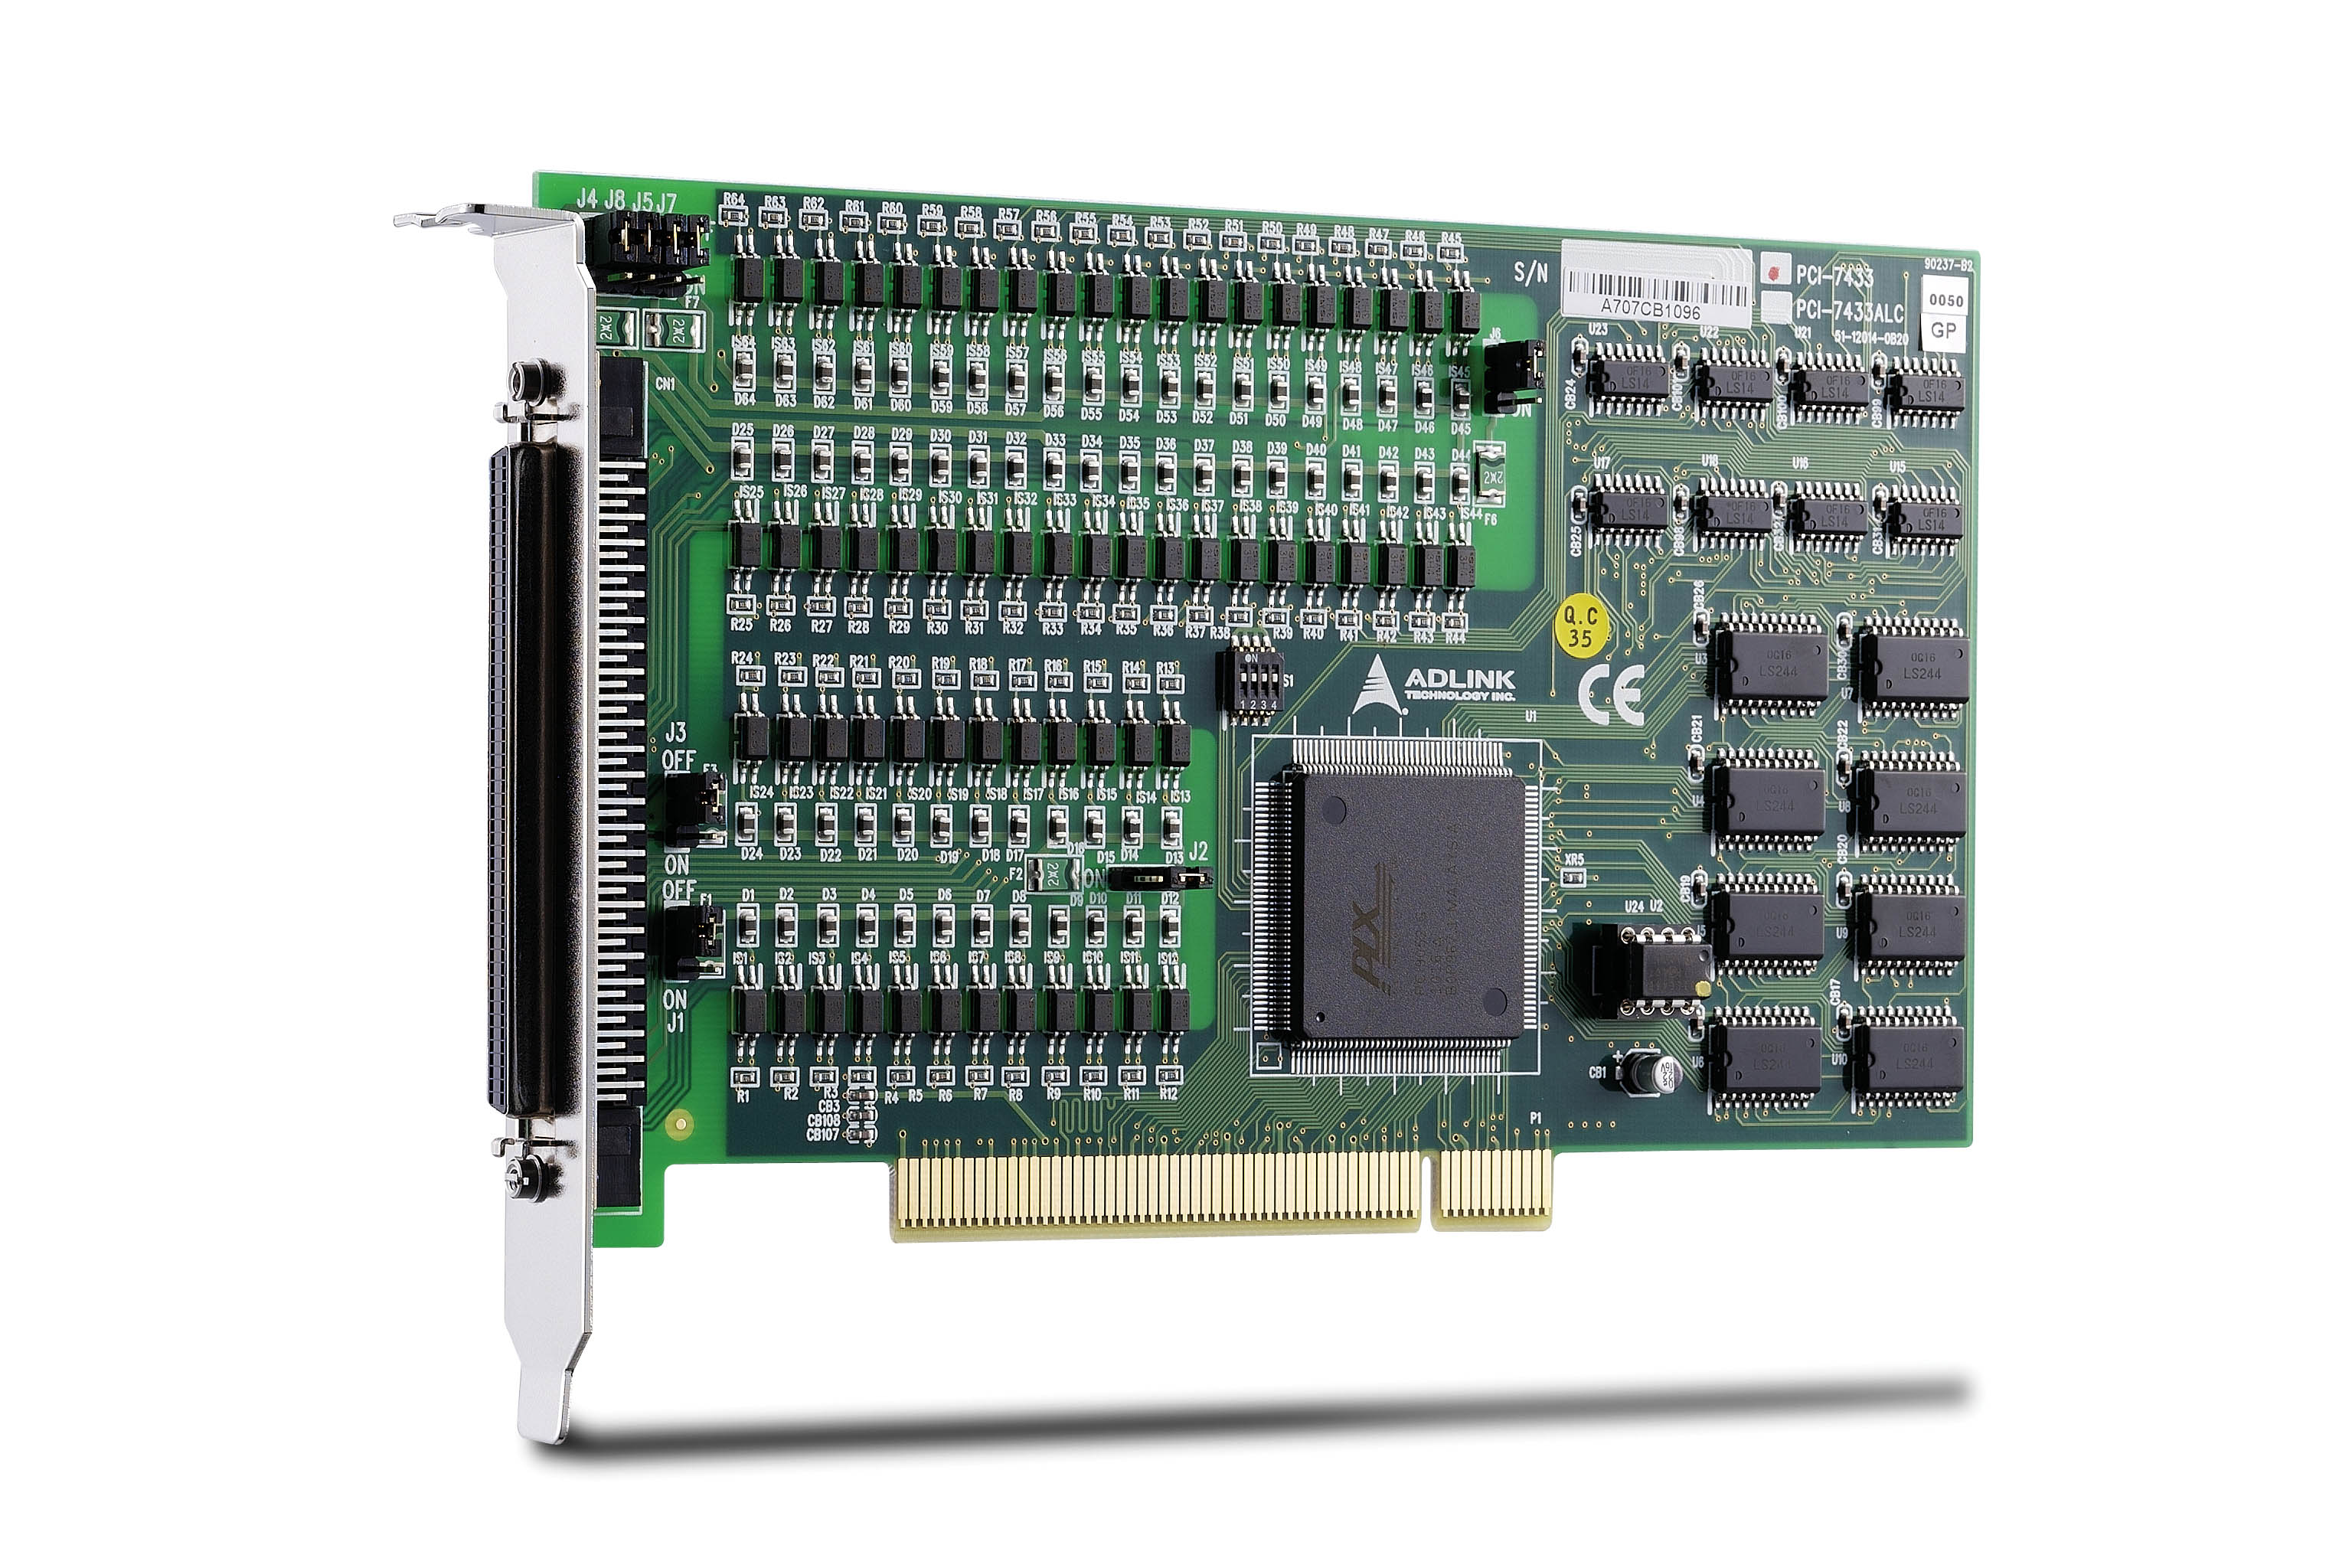 Pci definition. Adlink PCI-6208v-gl. Adlink PCI-6216v-gl. Advantech PCI-1620b. Шина PCI (peripheral component Interconnect).